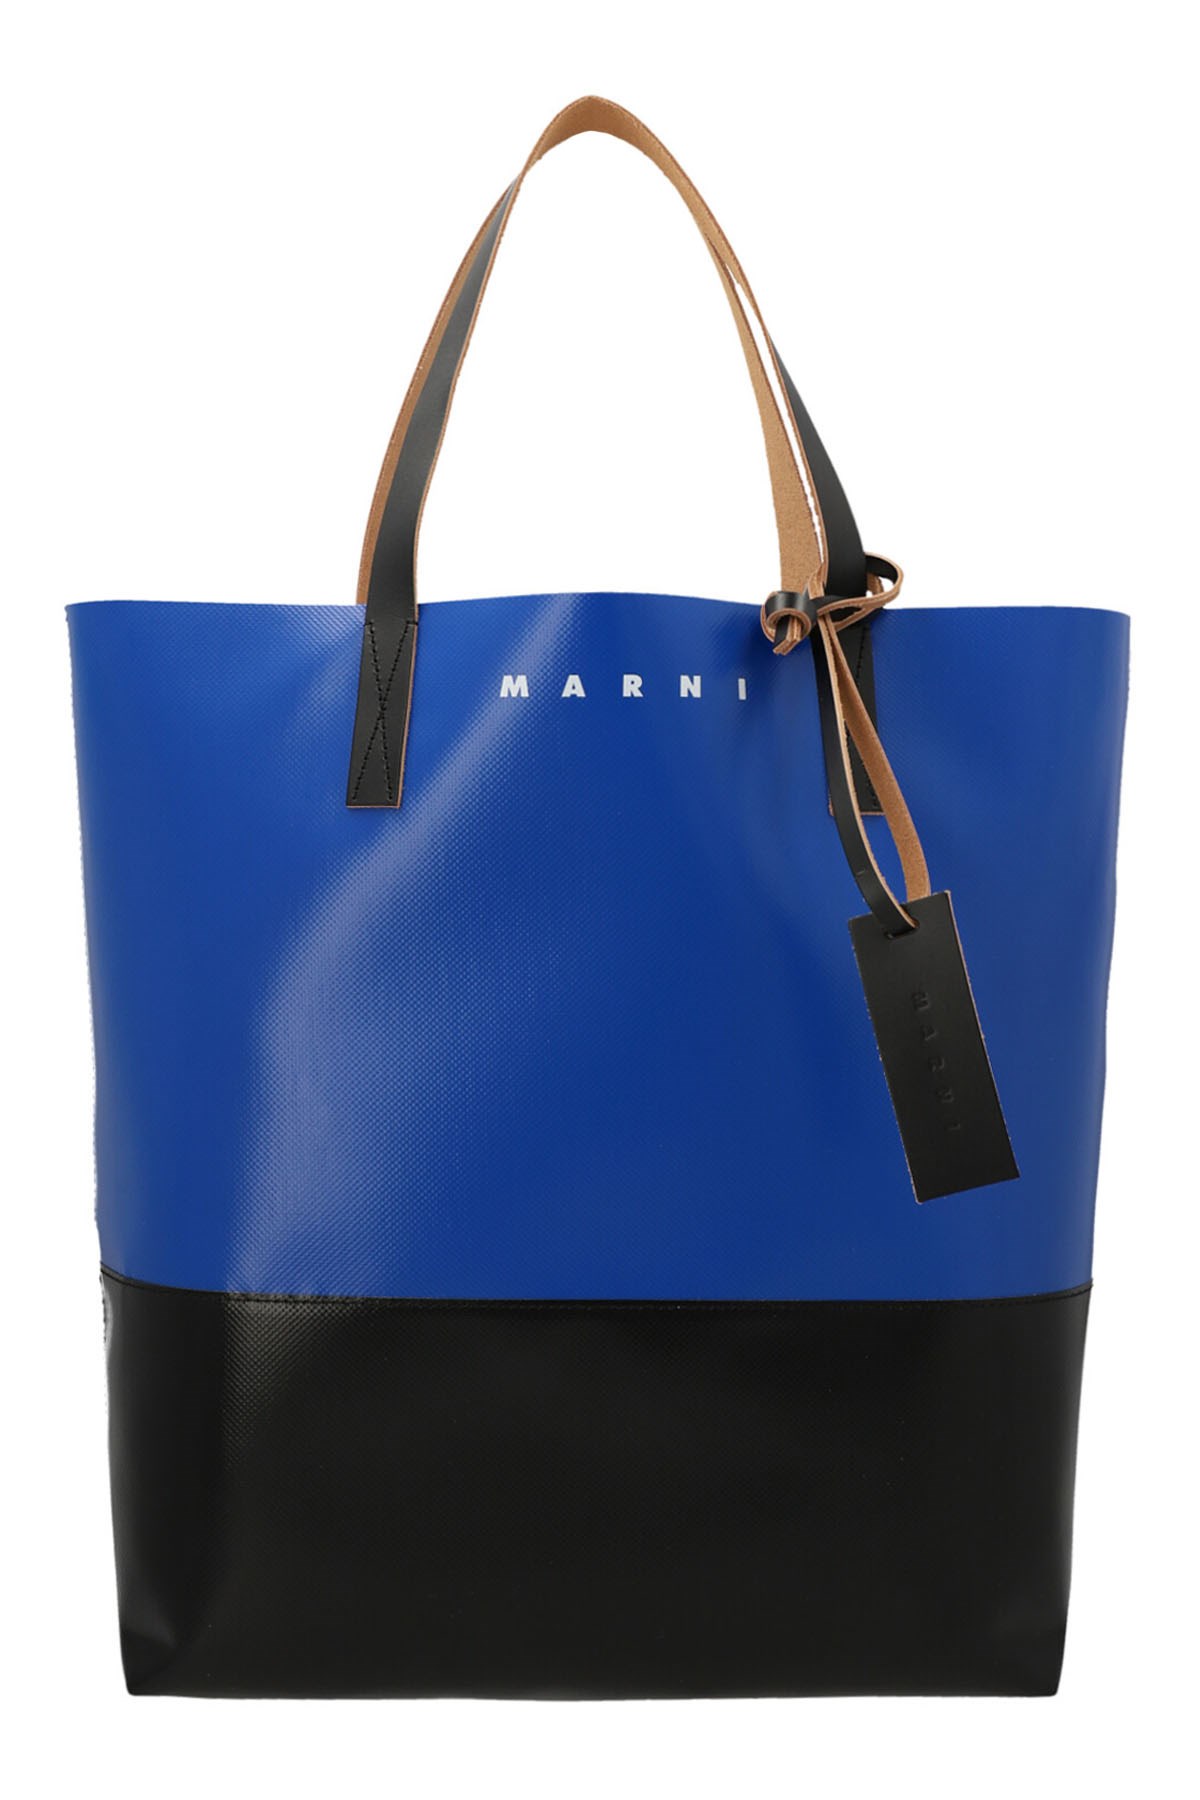 MARNI 'Tribeca' Shopping Bag